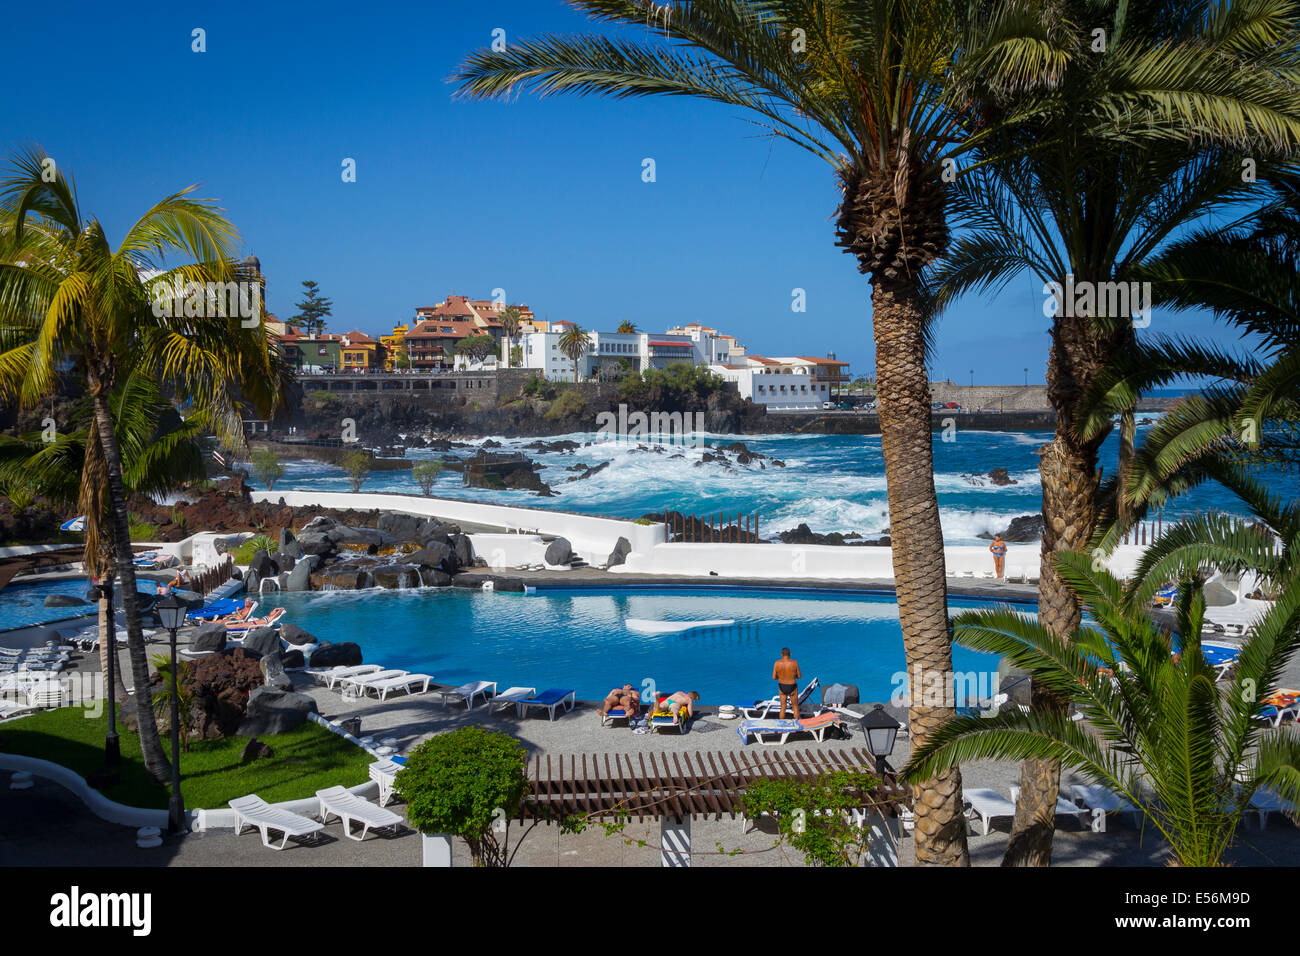 Puerto de la Cruz de la ville. Tenerife, Canaries, Espagne, l'océan Atlantique, l'Europe. Banque D'Images